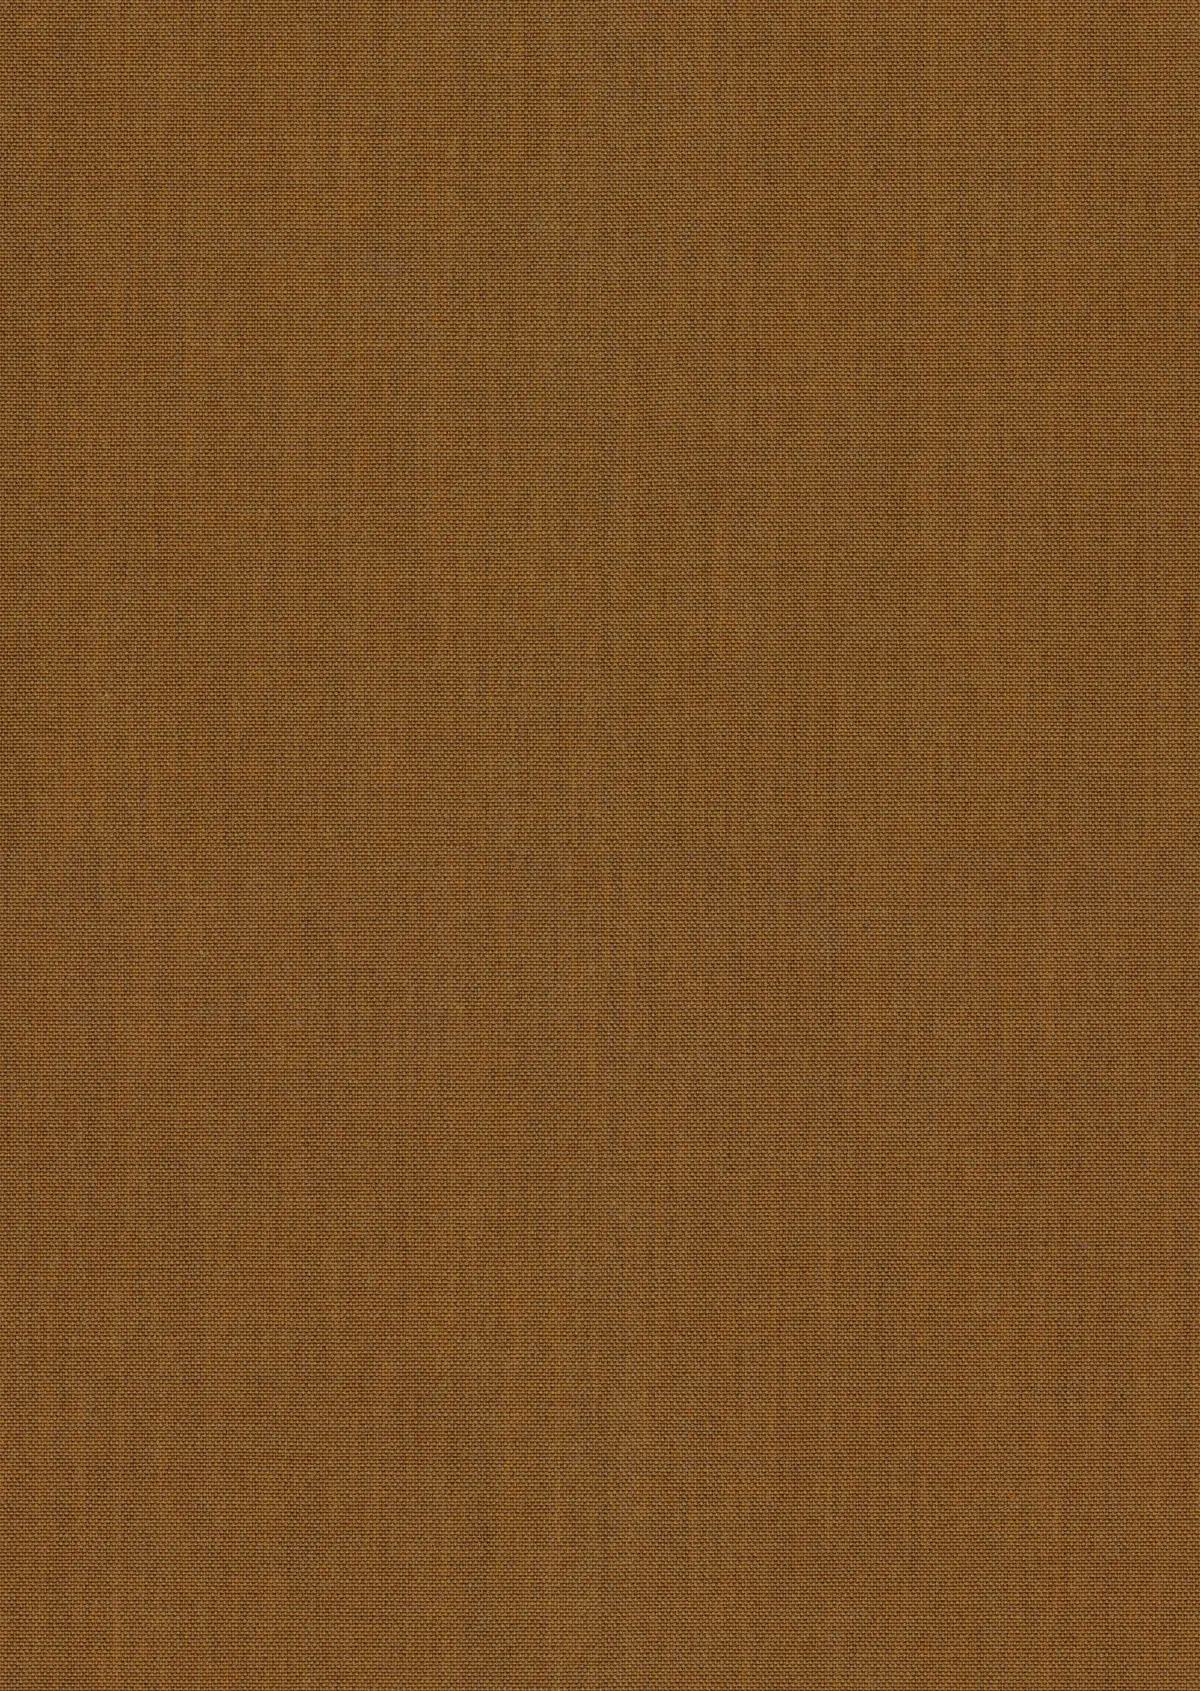 Fabric sample Remix 3 433 brown